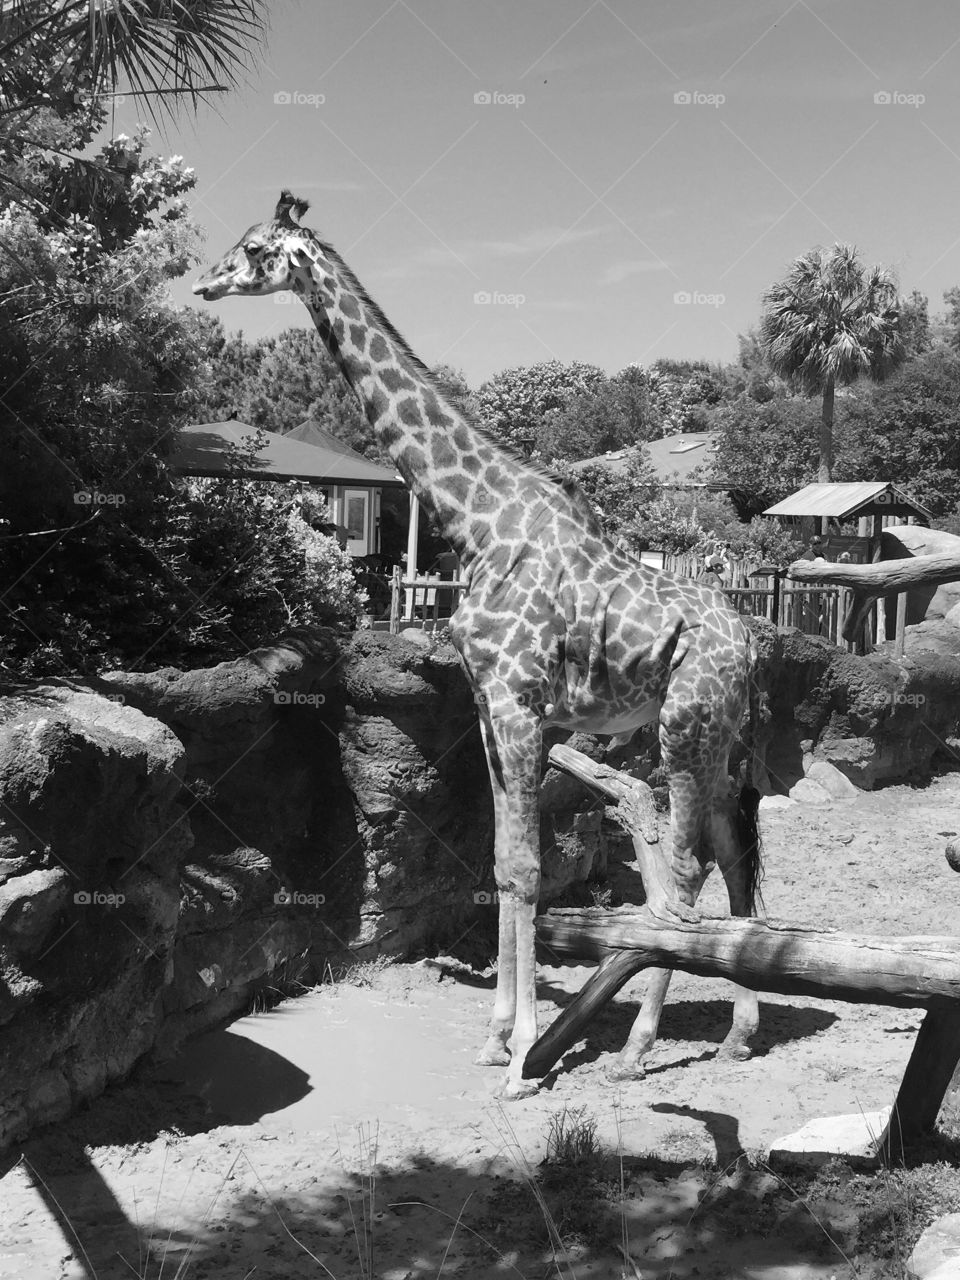 Eating giraffe at the Houston Texas zoo